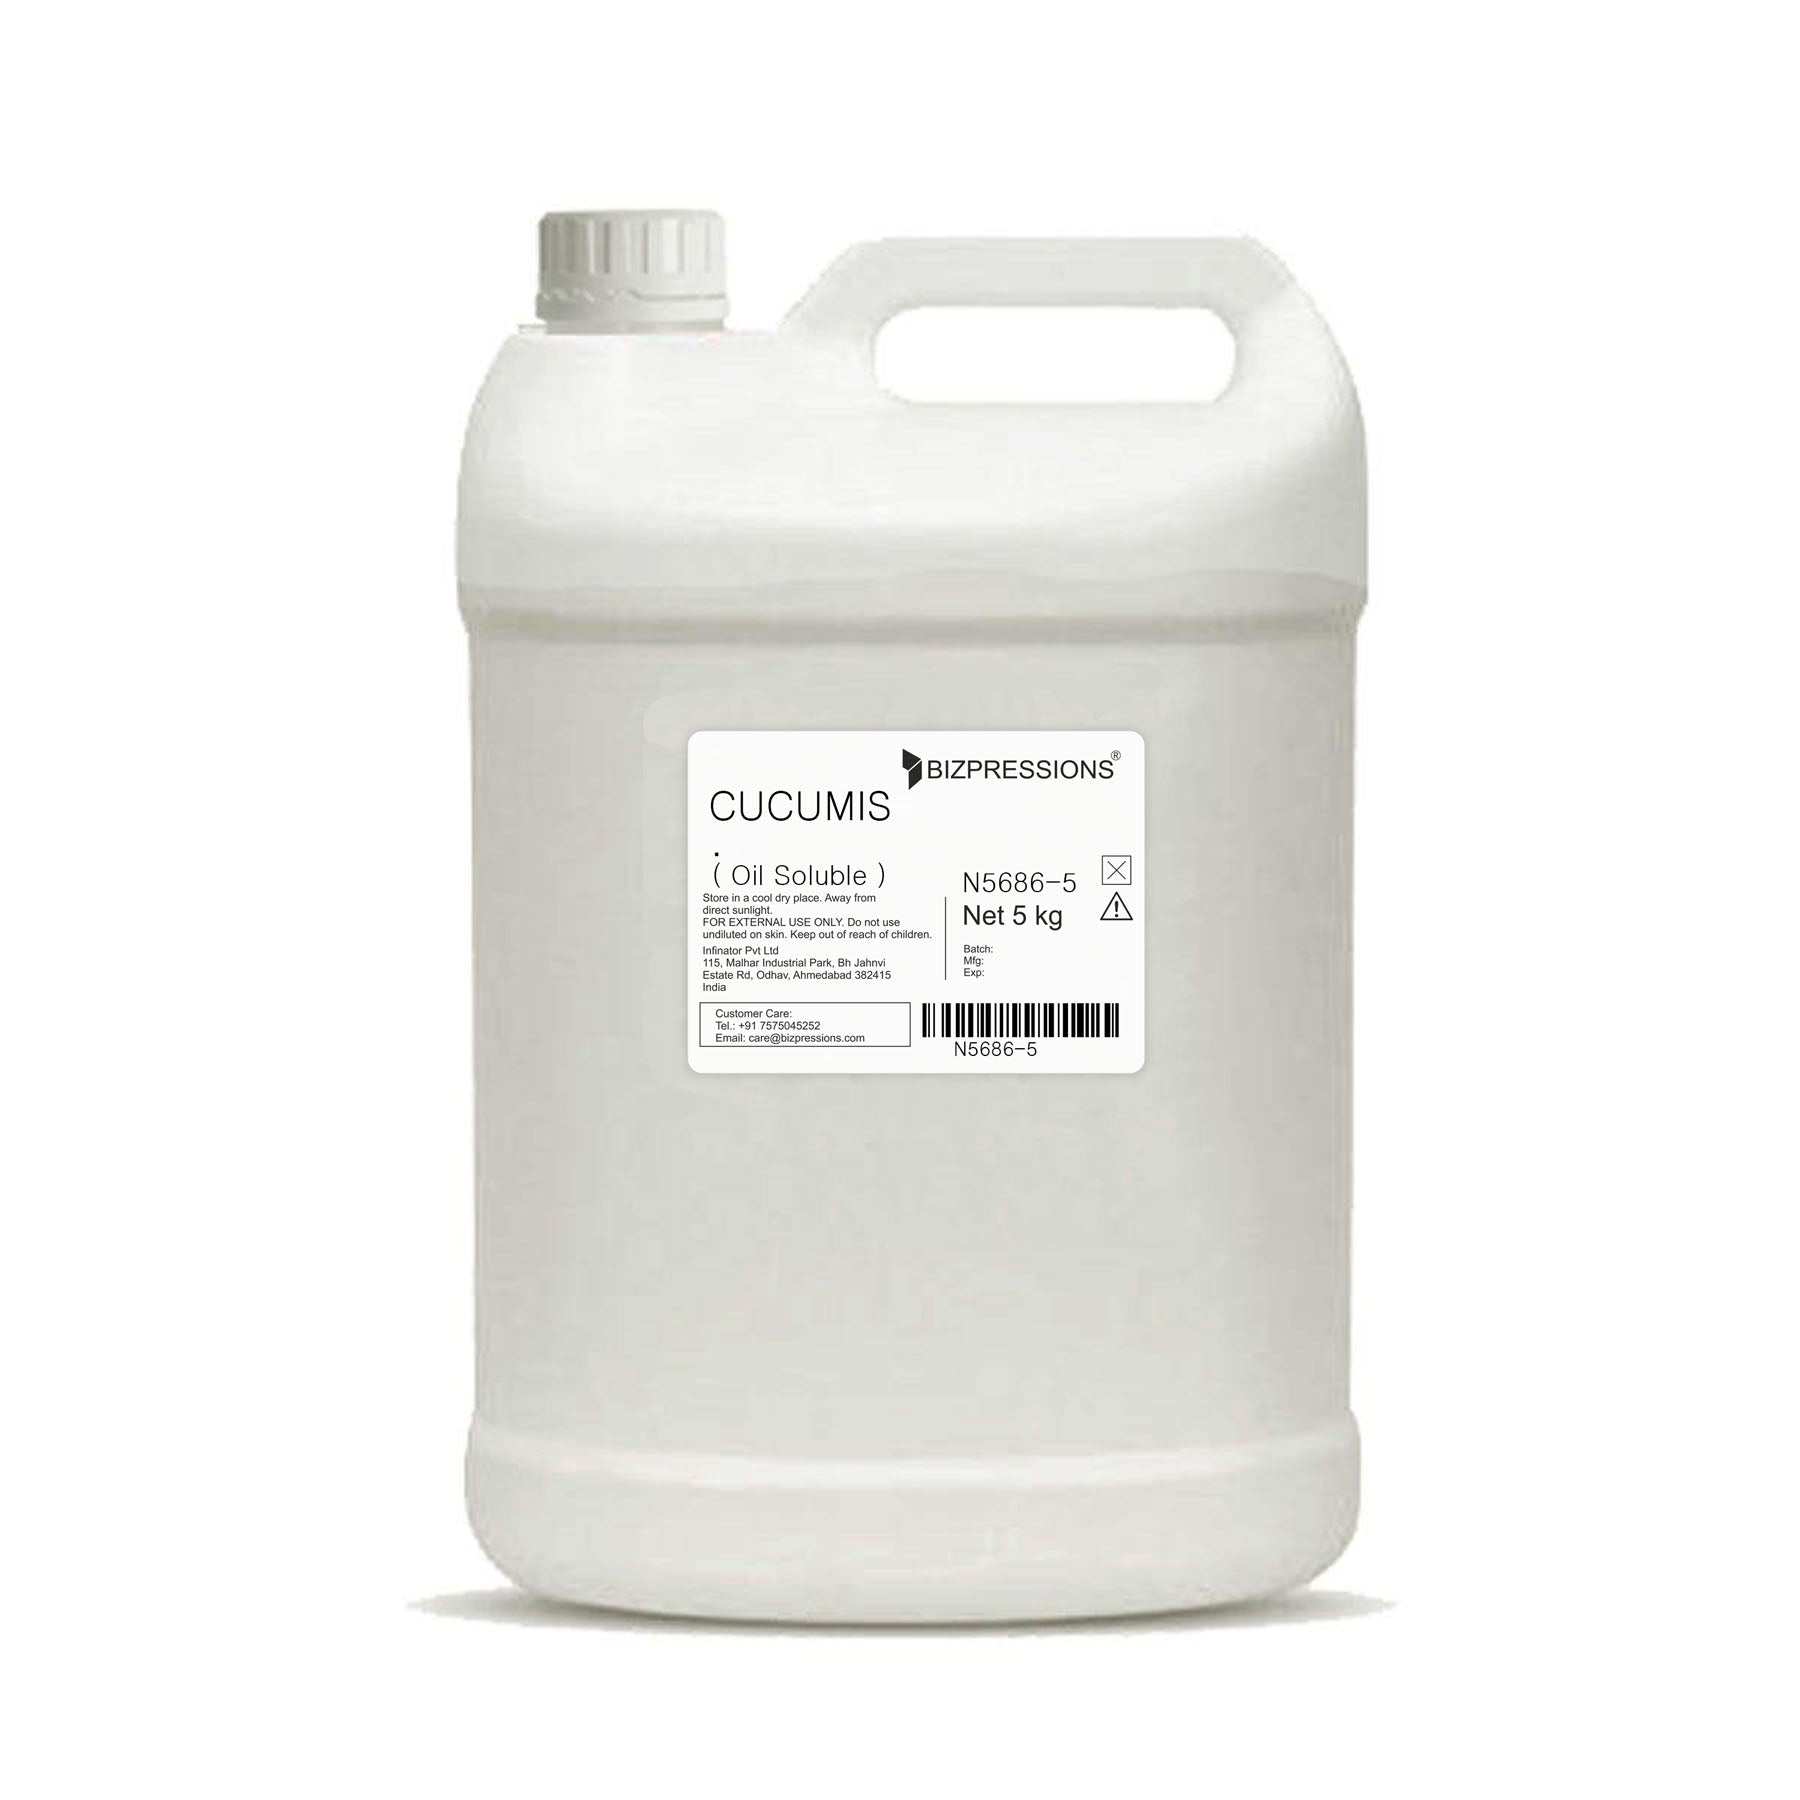 CUCUMIS - Fragrance ( Oil Soluble ) - 5 kg